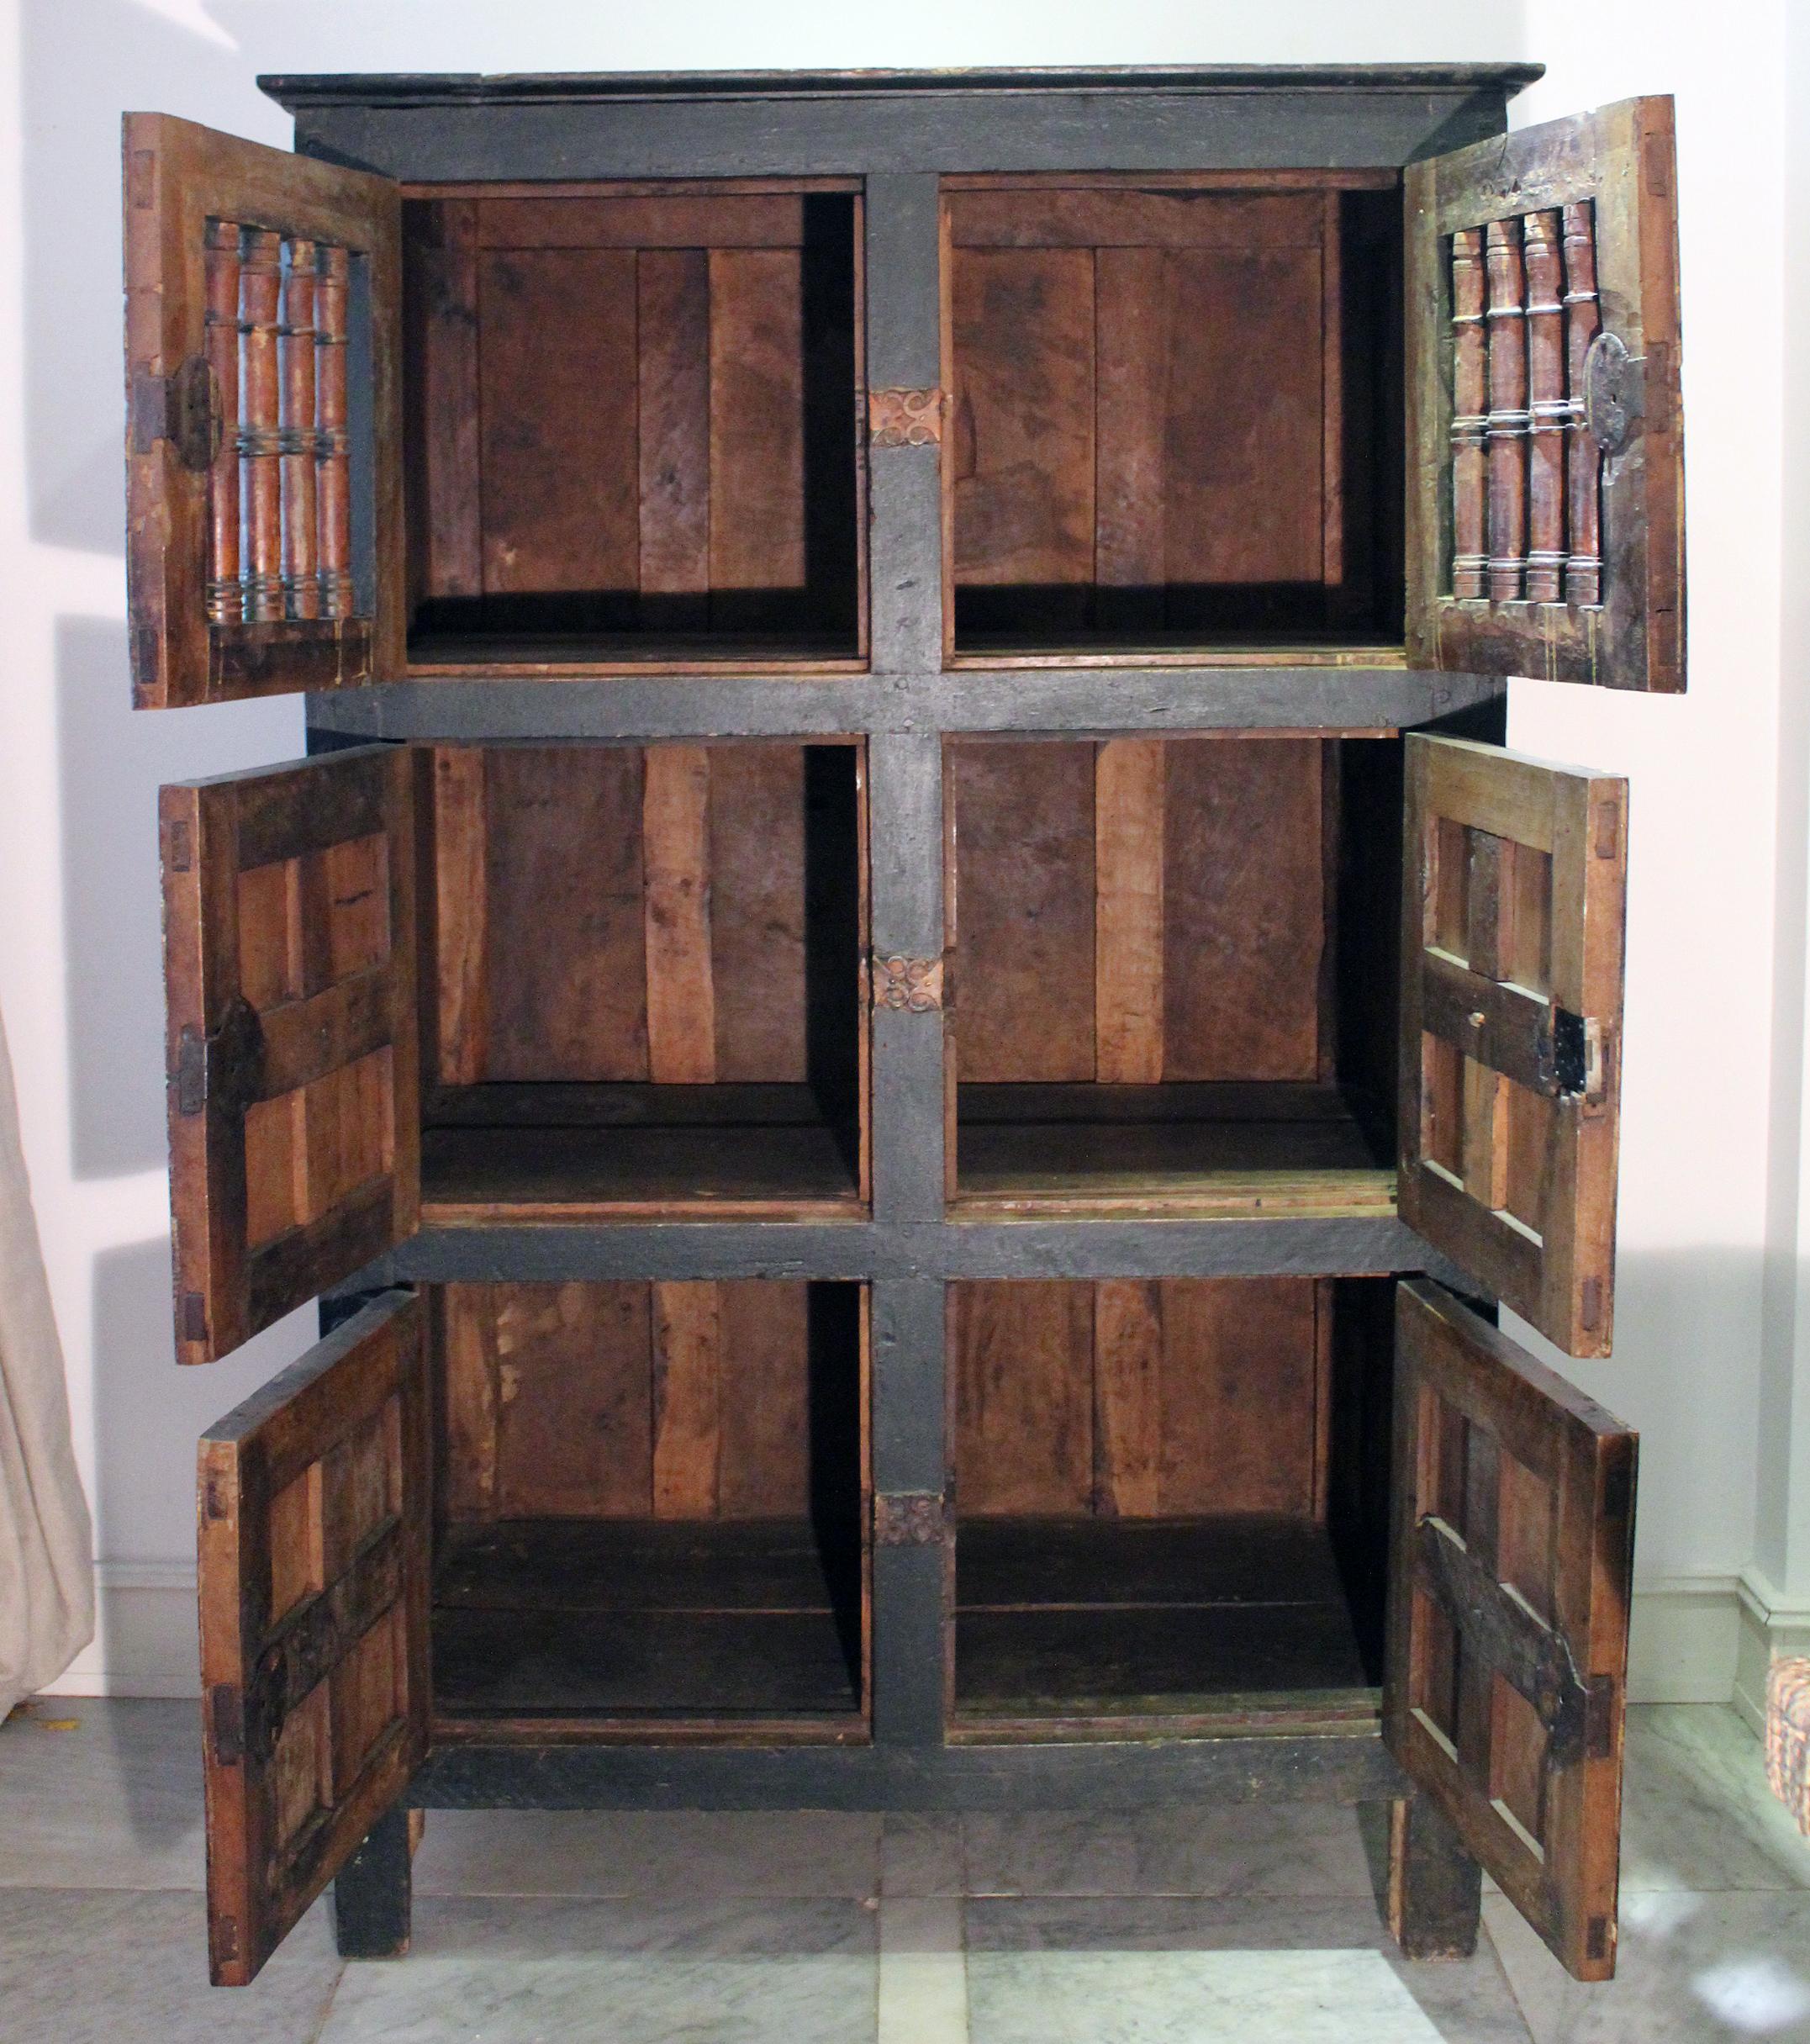 17th Century Spanish Painted Cabinet with Original Doors, Locks and Fittings (17. Jahrhundert)